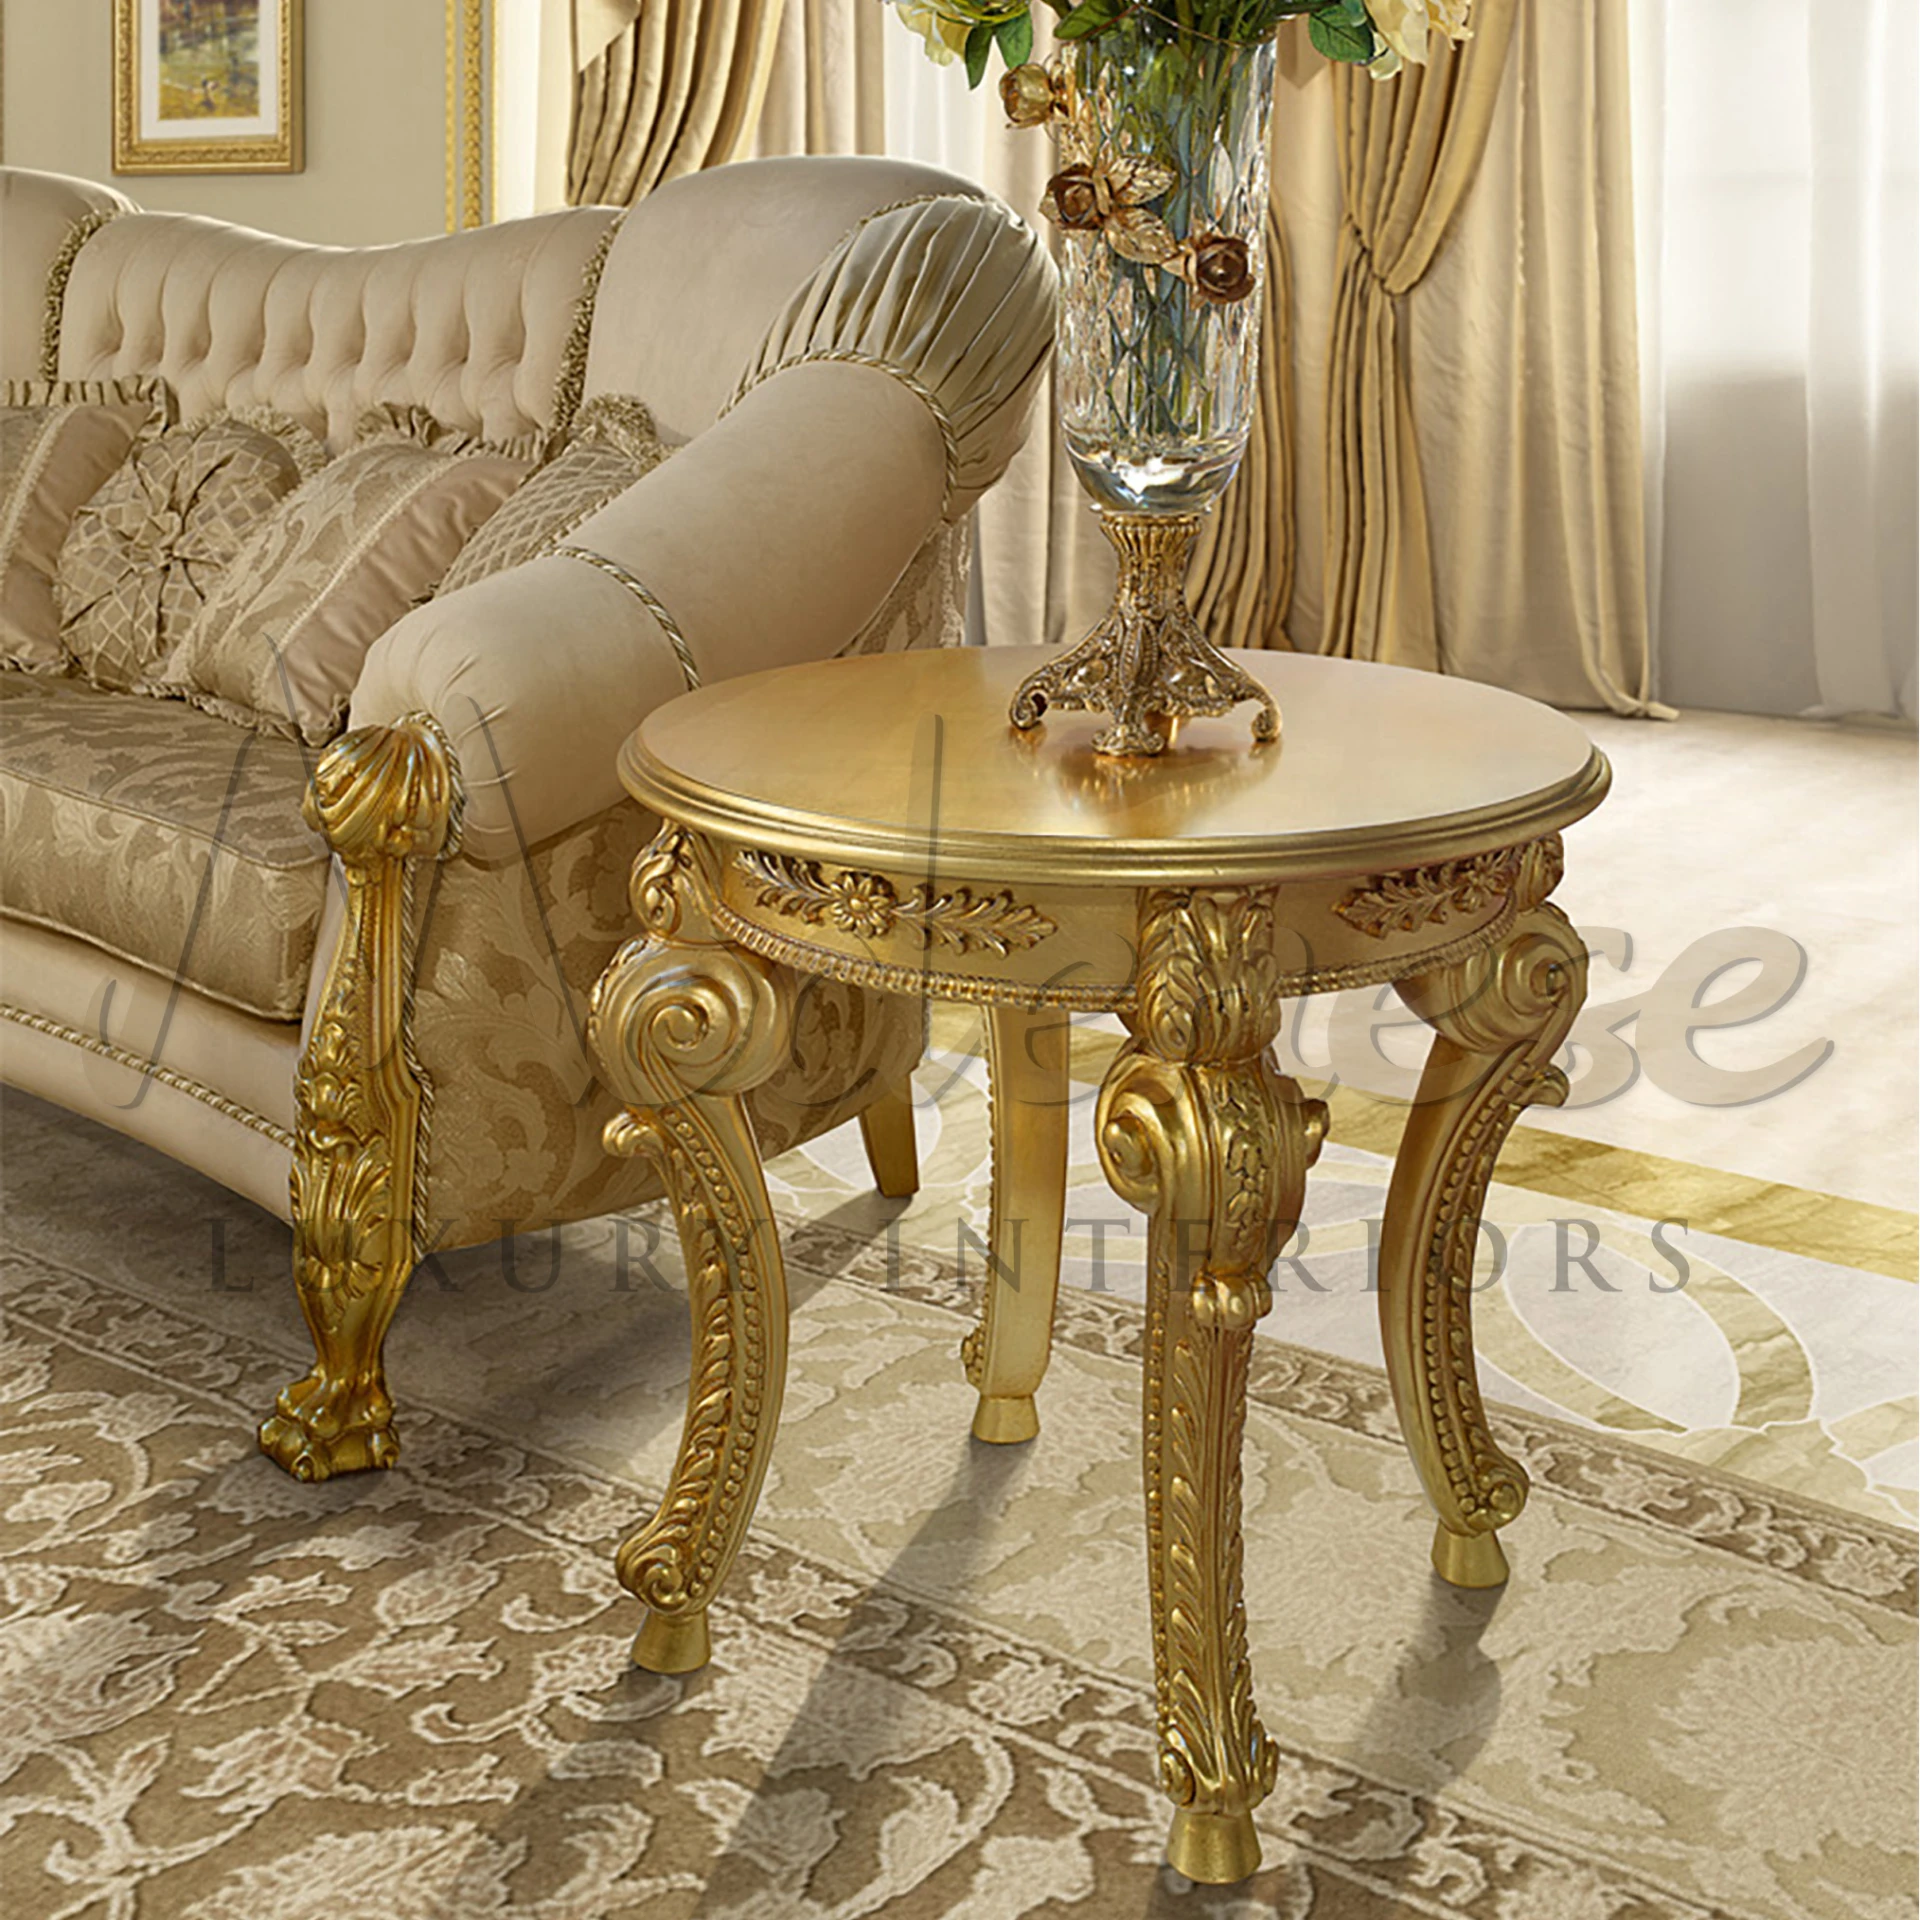 Timeless Charm: Elegant Round Gold Coffee Table Design